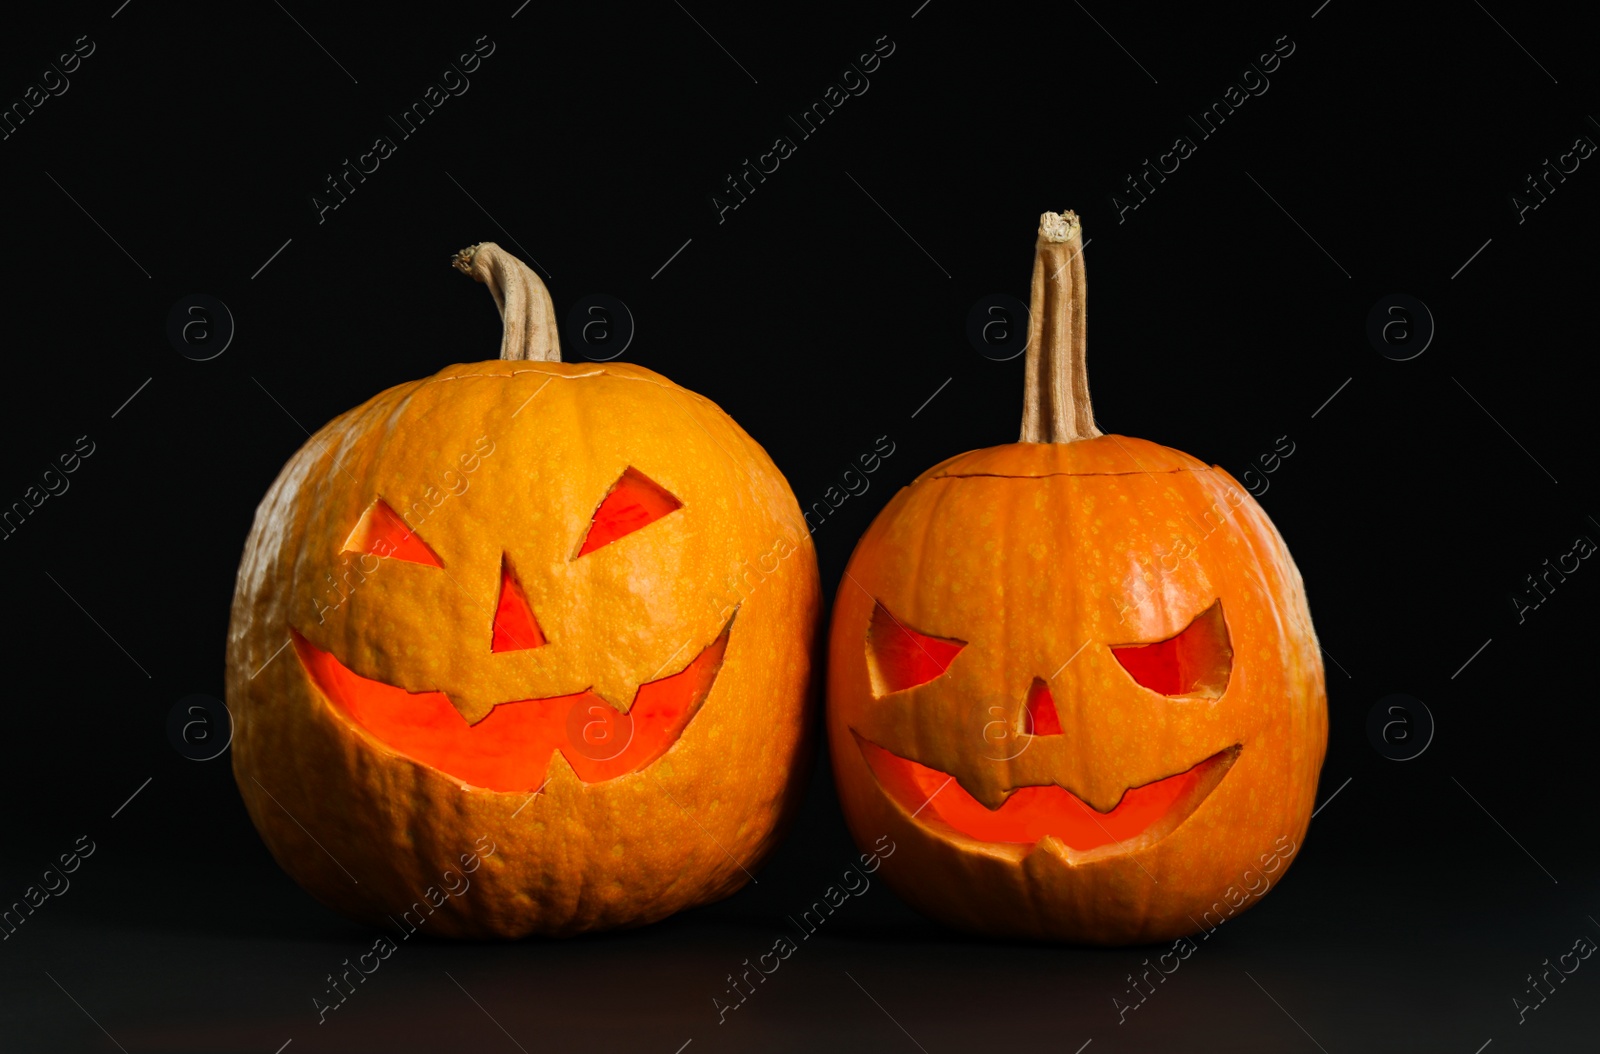 Photo of Pumpkin heads on black background. Jack lantern - traditional Halloween decor